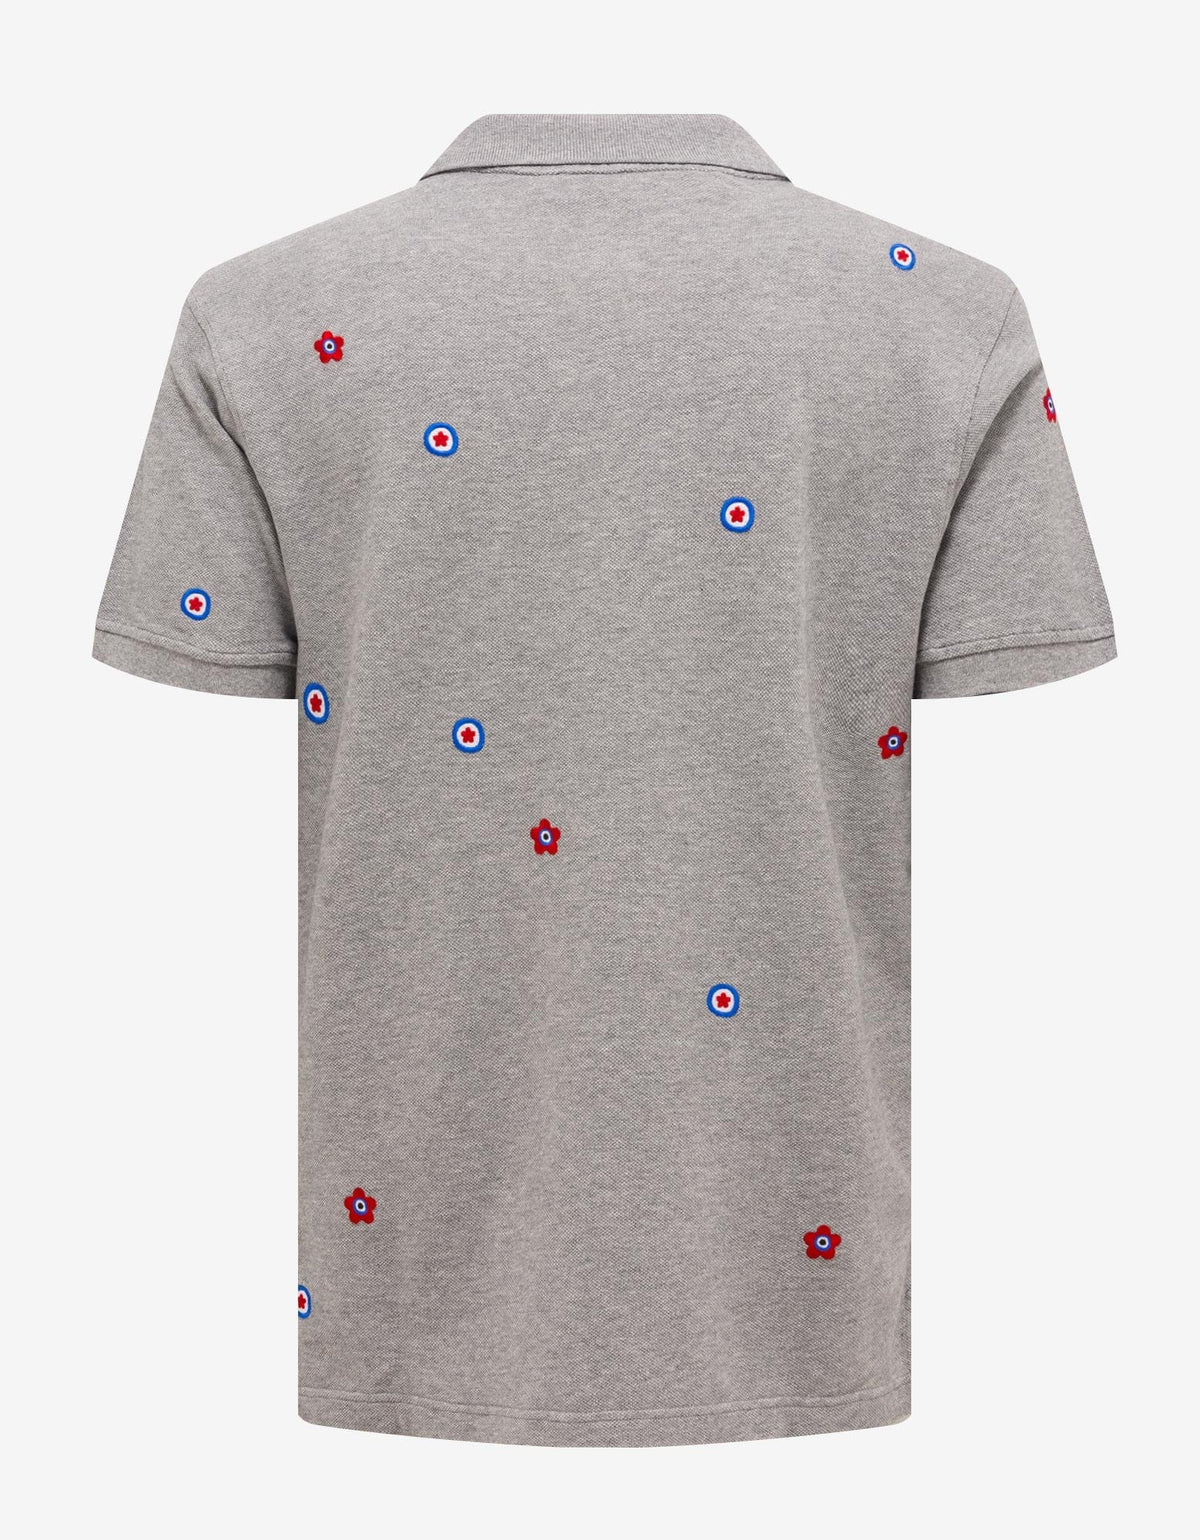 Kenzo Grey 'Kenzo Target' Embroidered Polo T-Shirt